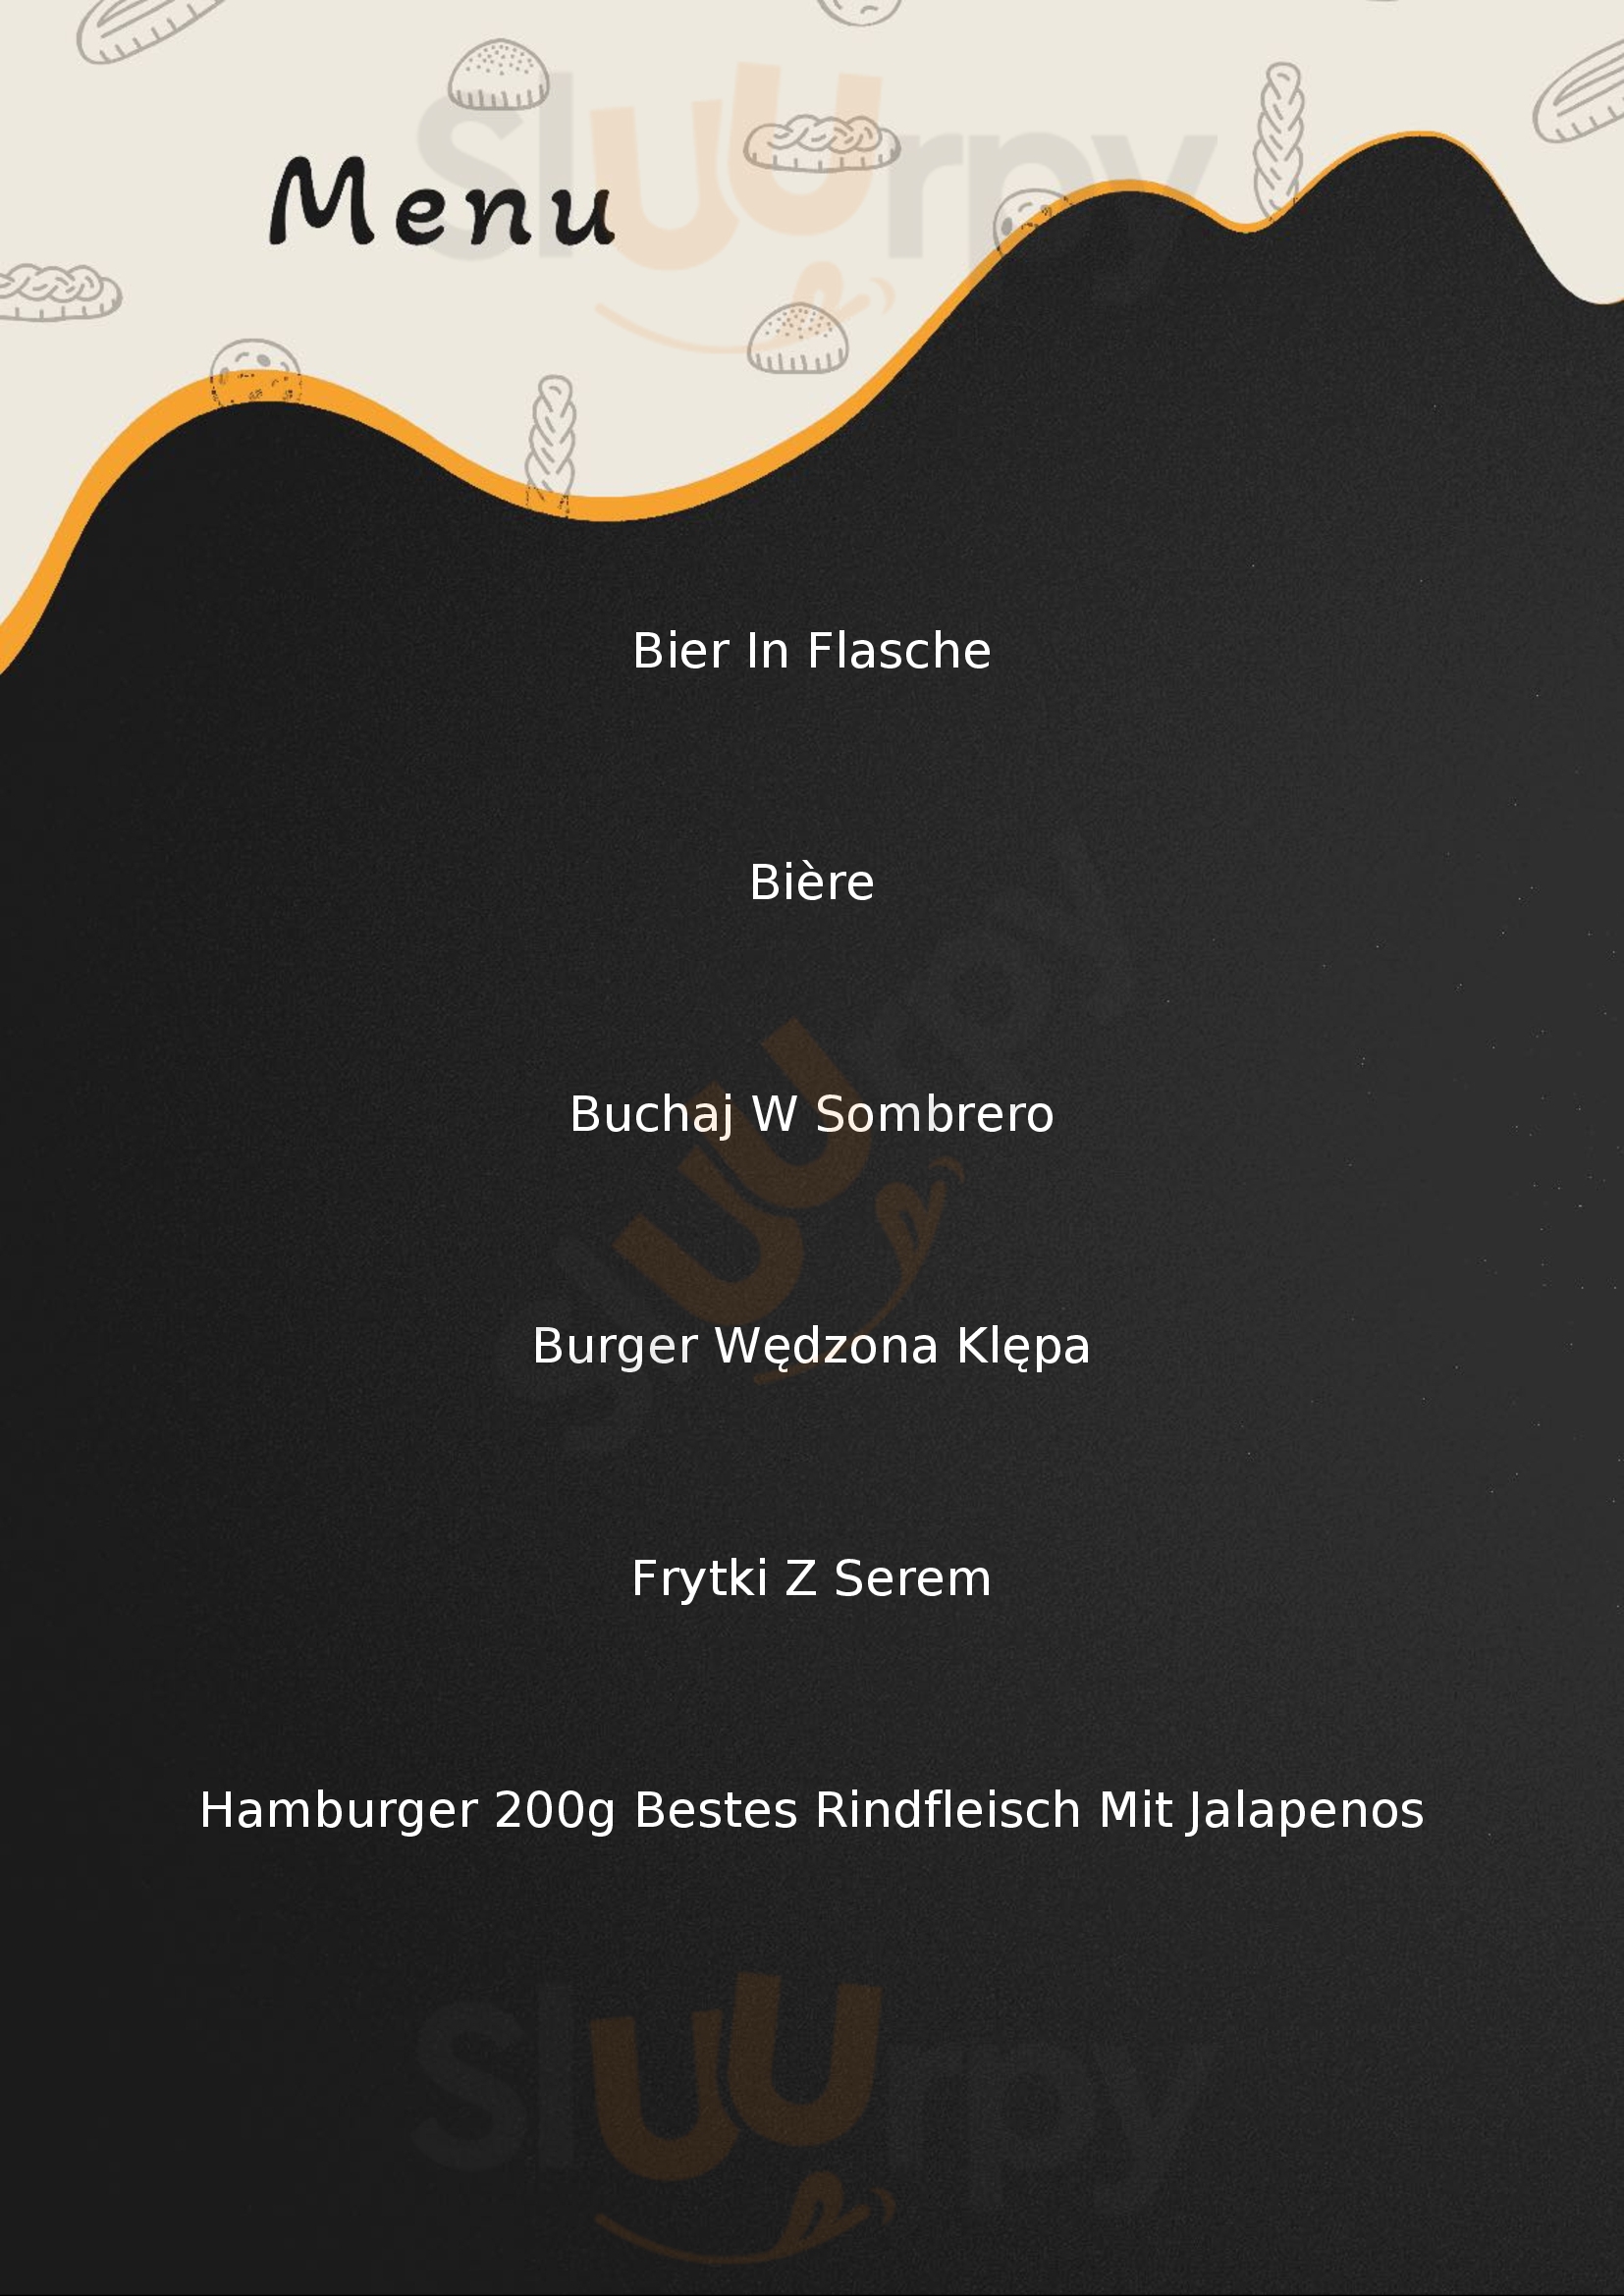 Masarnia Burger Bar Kołobrzeg Menu - 1